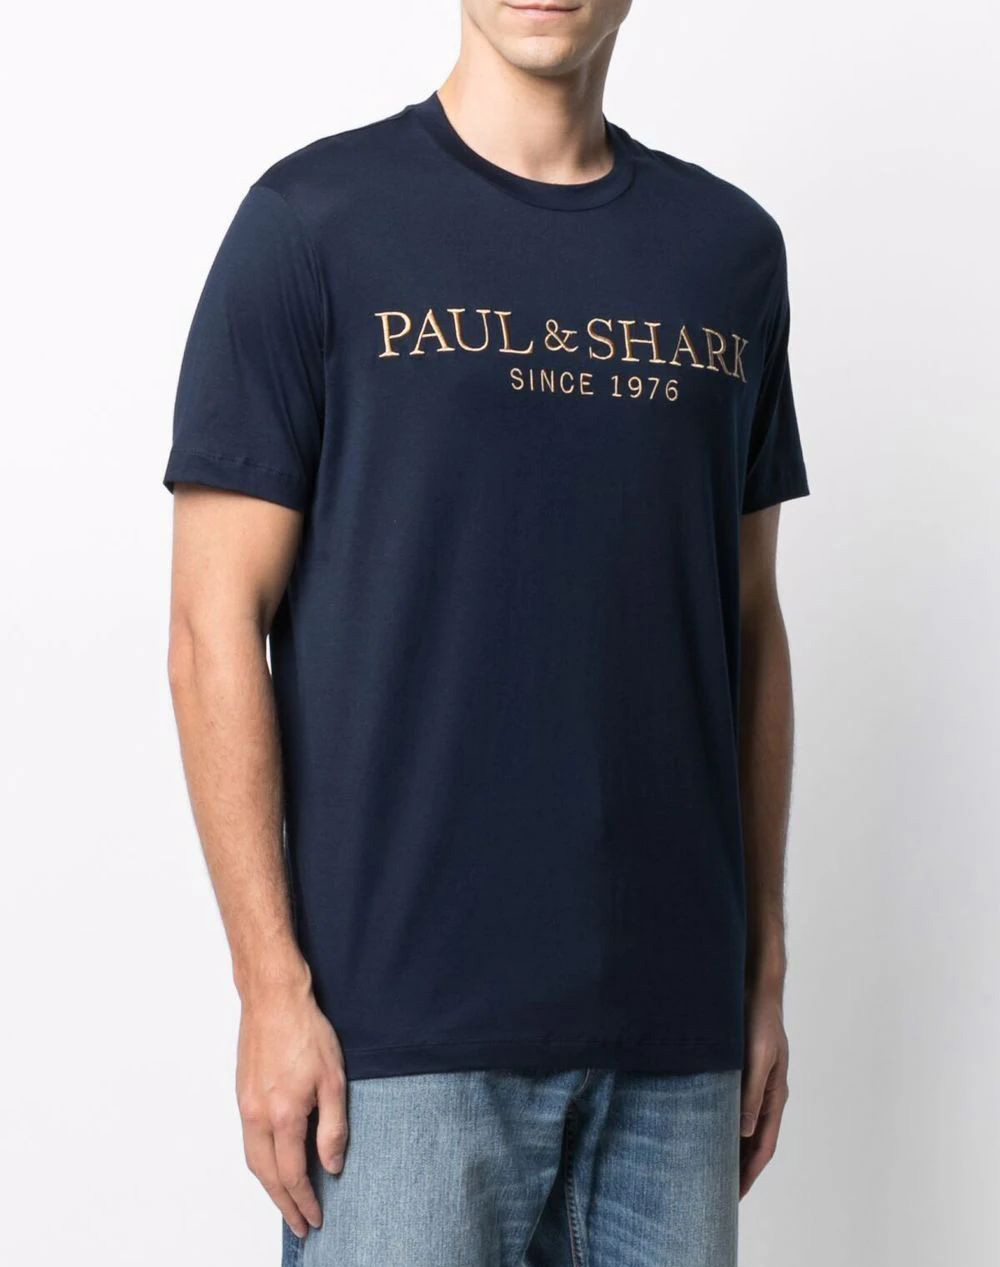 PAUL&SHARK MEN”S KNITTED T-SHIRT 24411020-13 DarkBlue